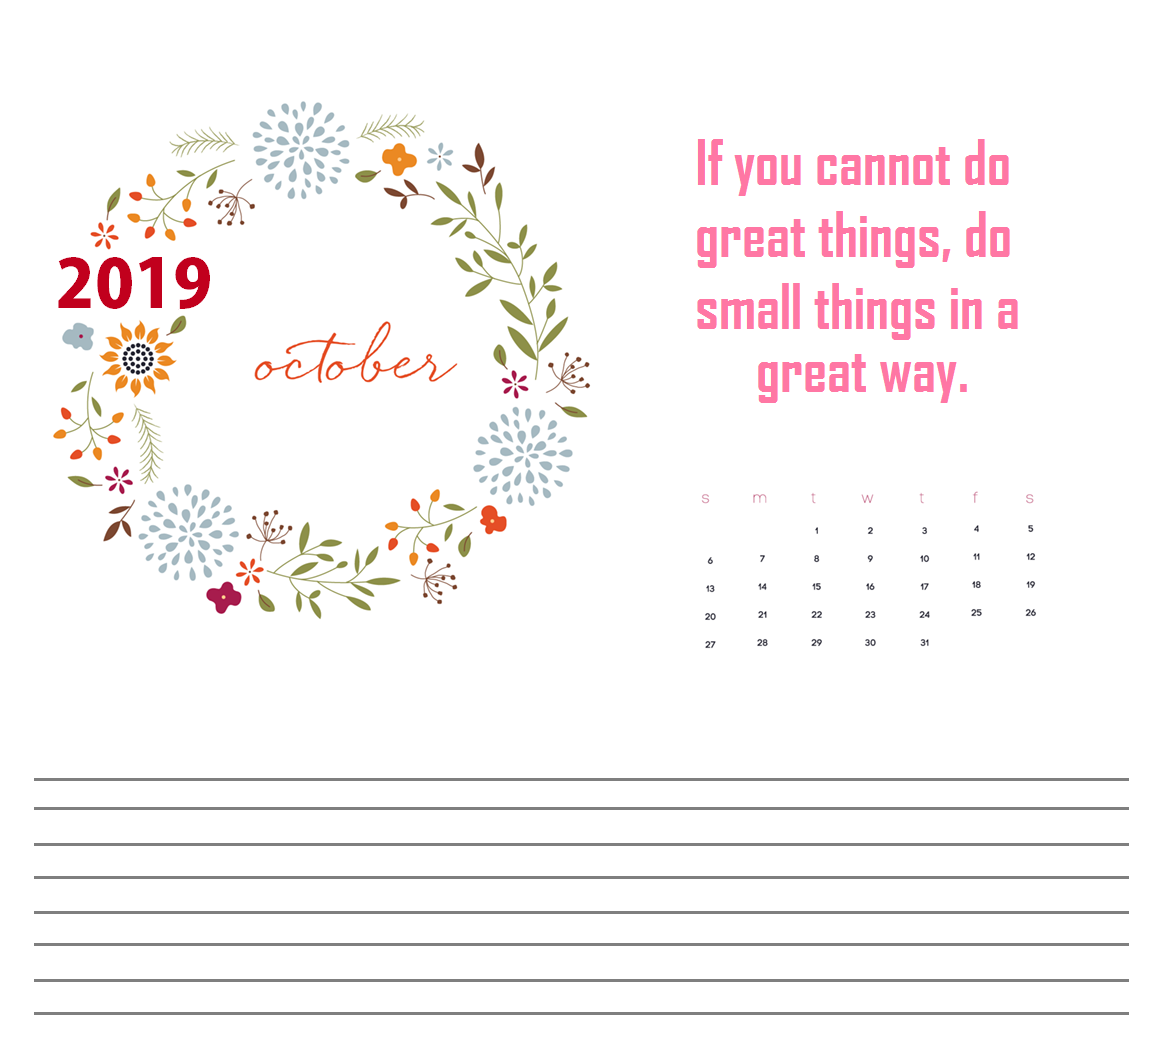 October 2019 Quotes Calendar For Desk